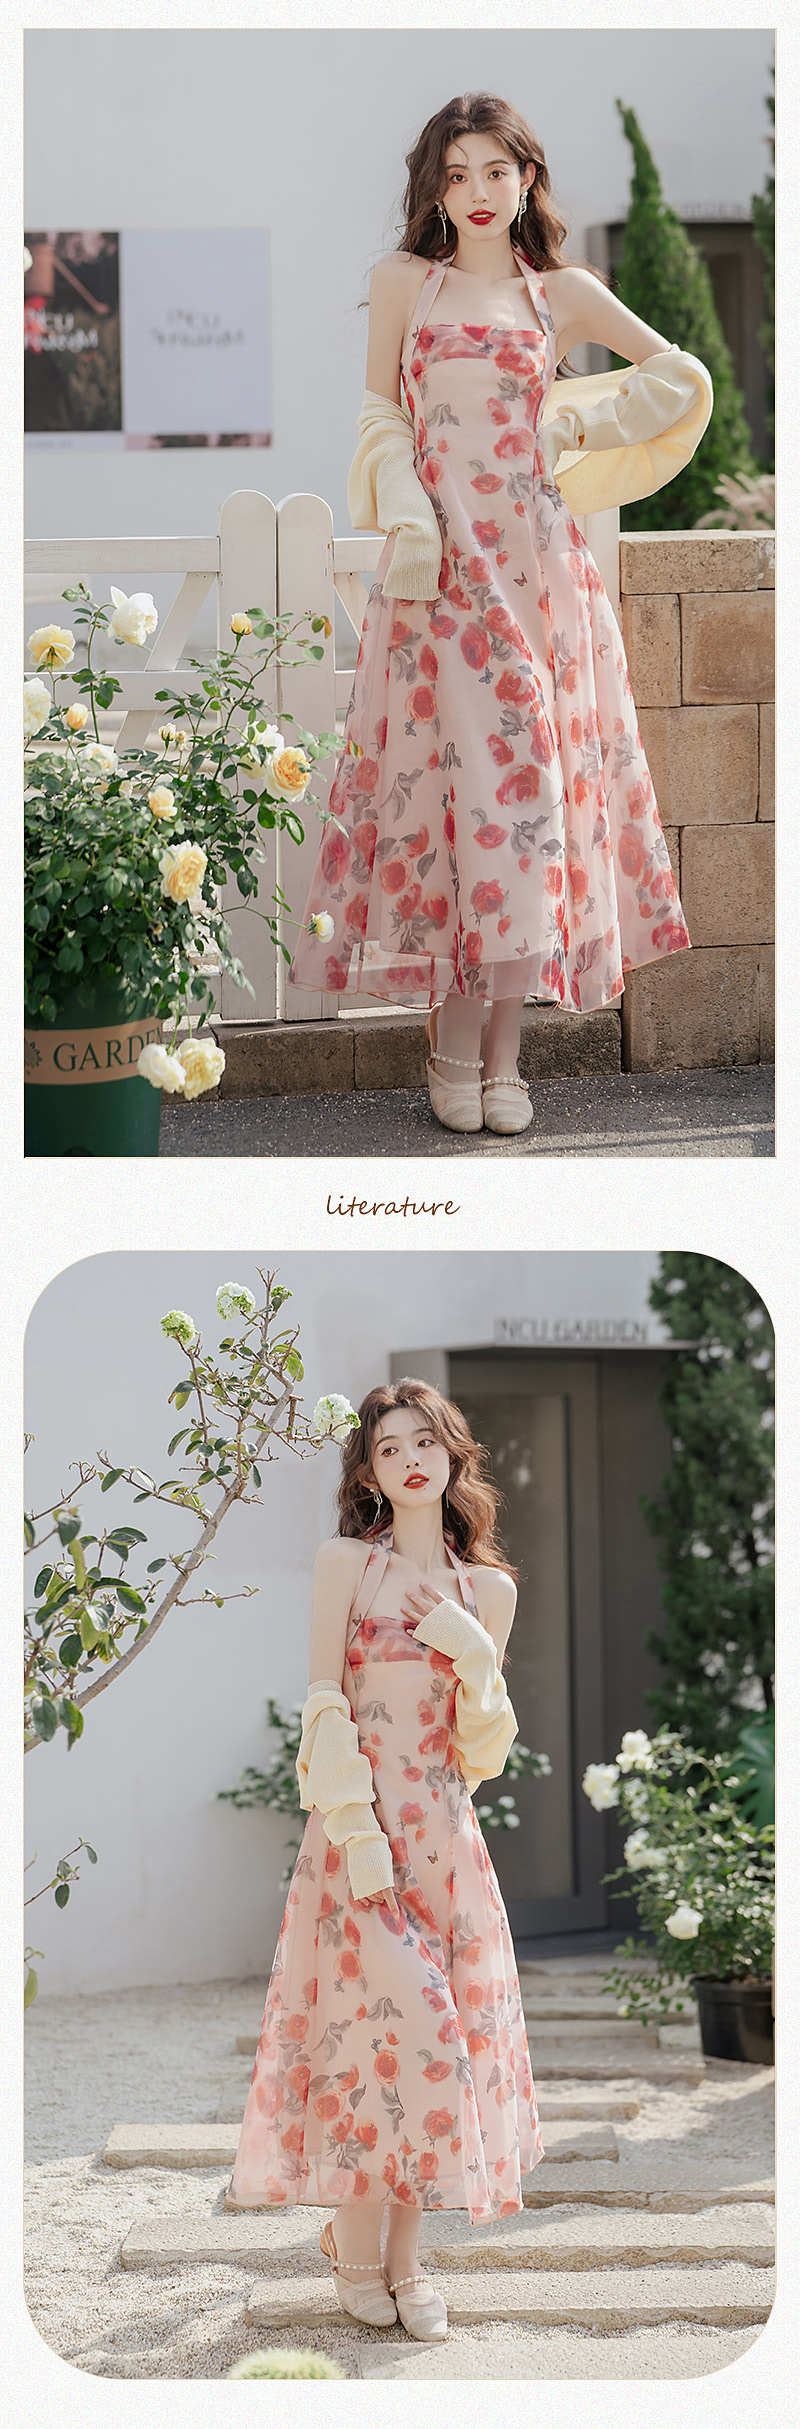 Beautiful-Floral-Printed-Halter-Casual-Chiffon-Dress-Cardigan-Top14